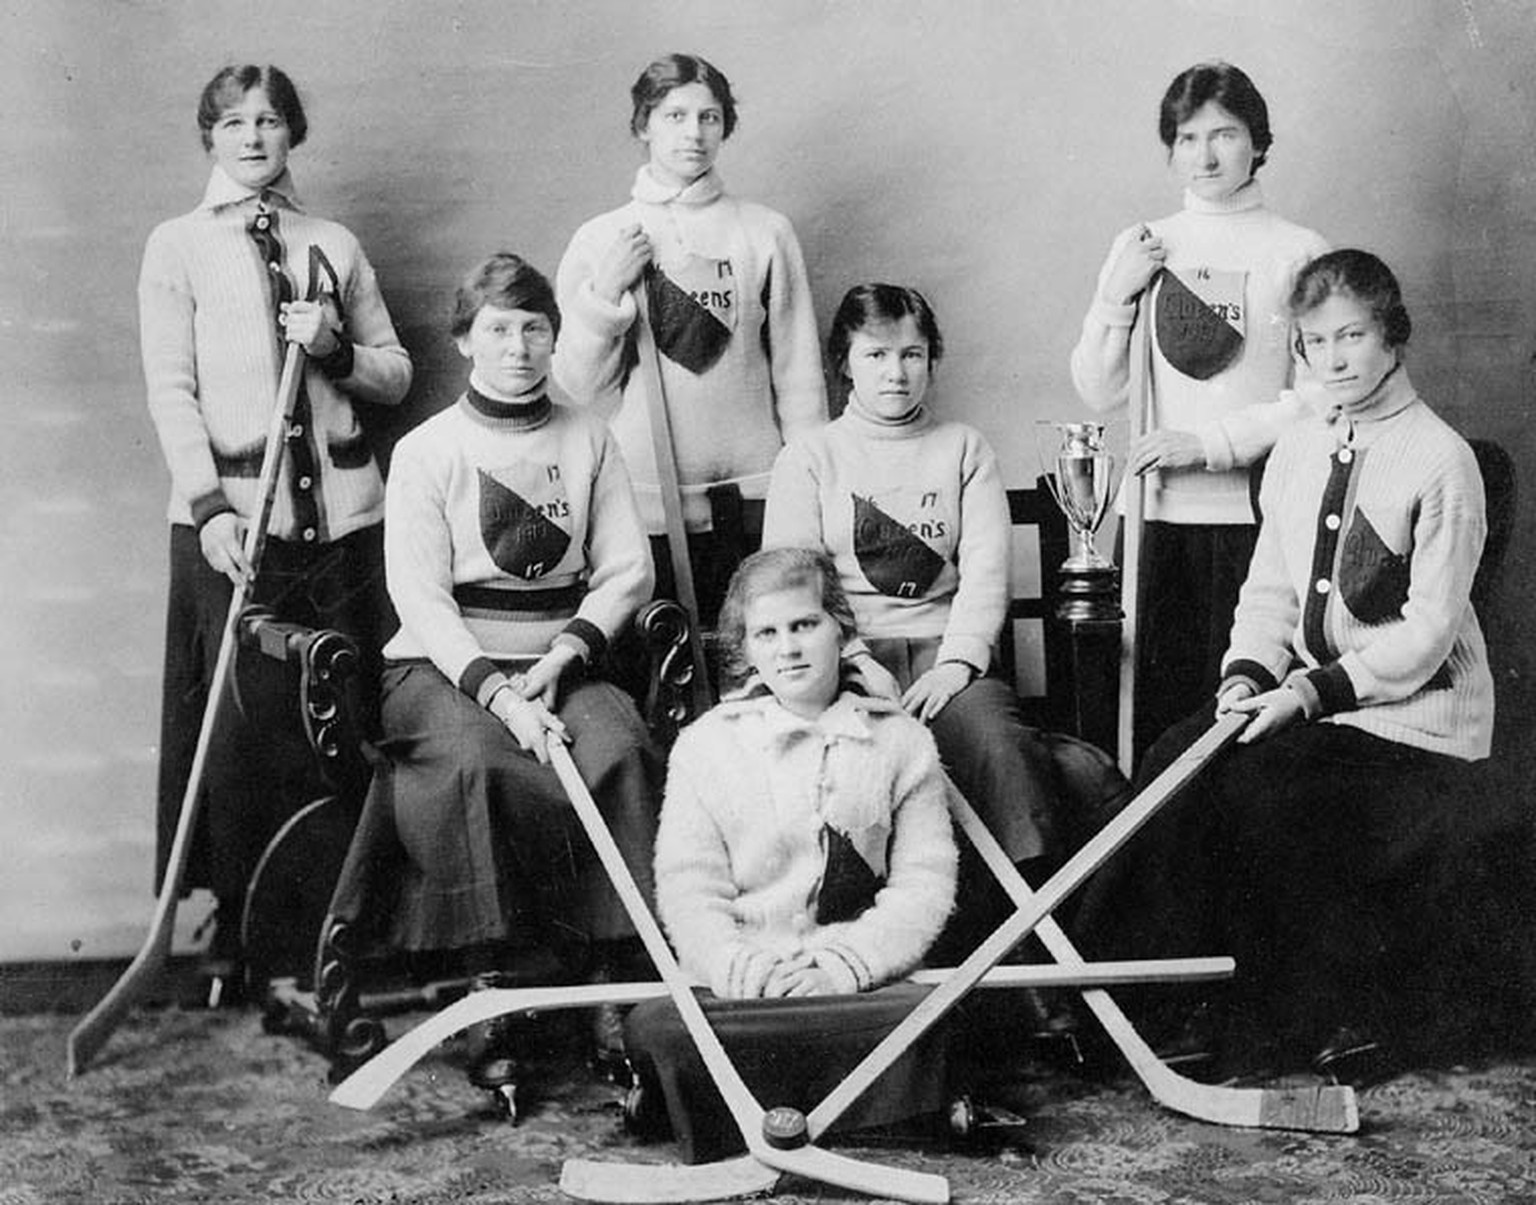 Hockey-Team der Queen&#039;s University, Kingston, Ontario (CA), 1917.
https://commons.wikimedia.org/wiki/File:Queen%27s_U_hockey_team_1917.jpg